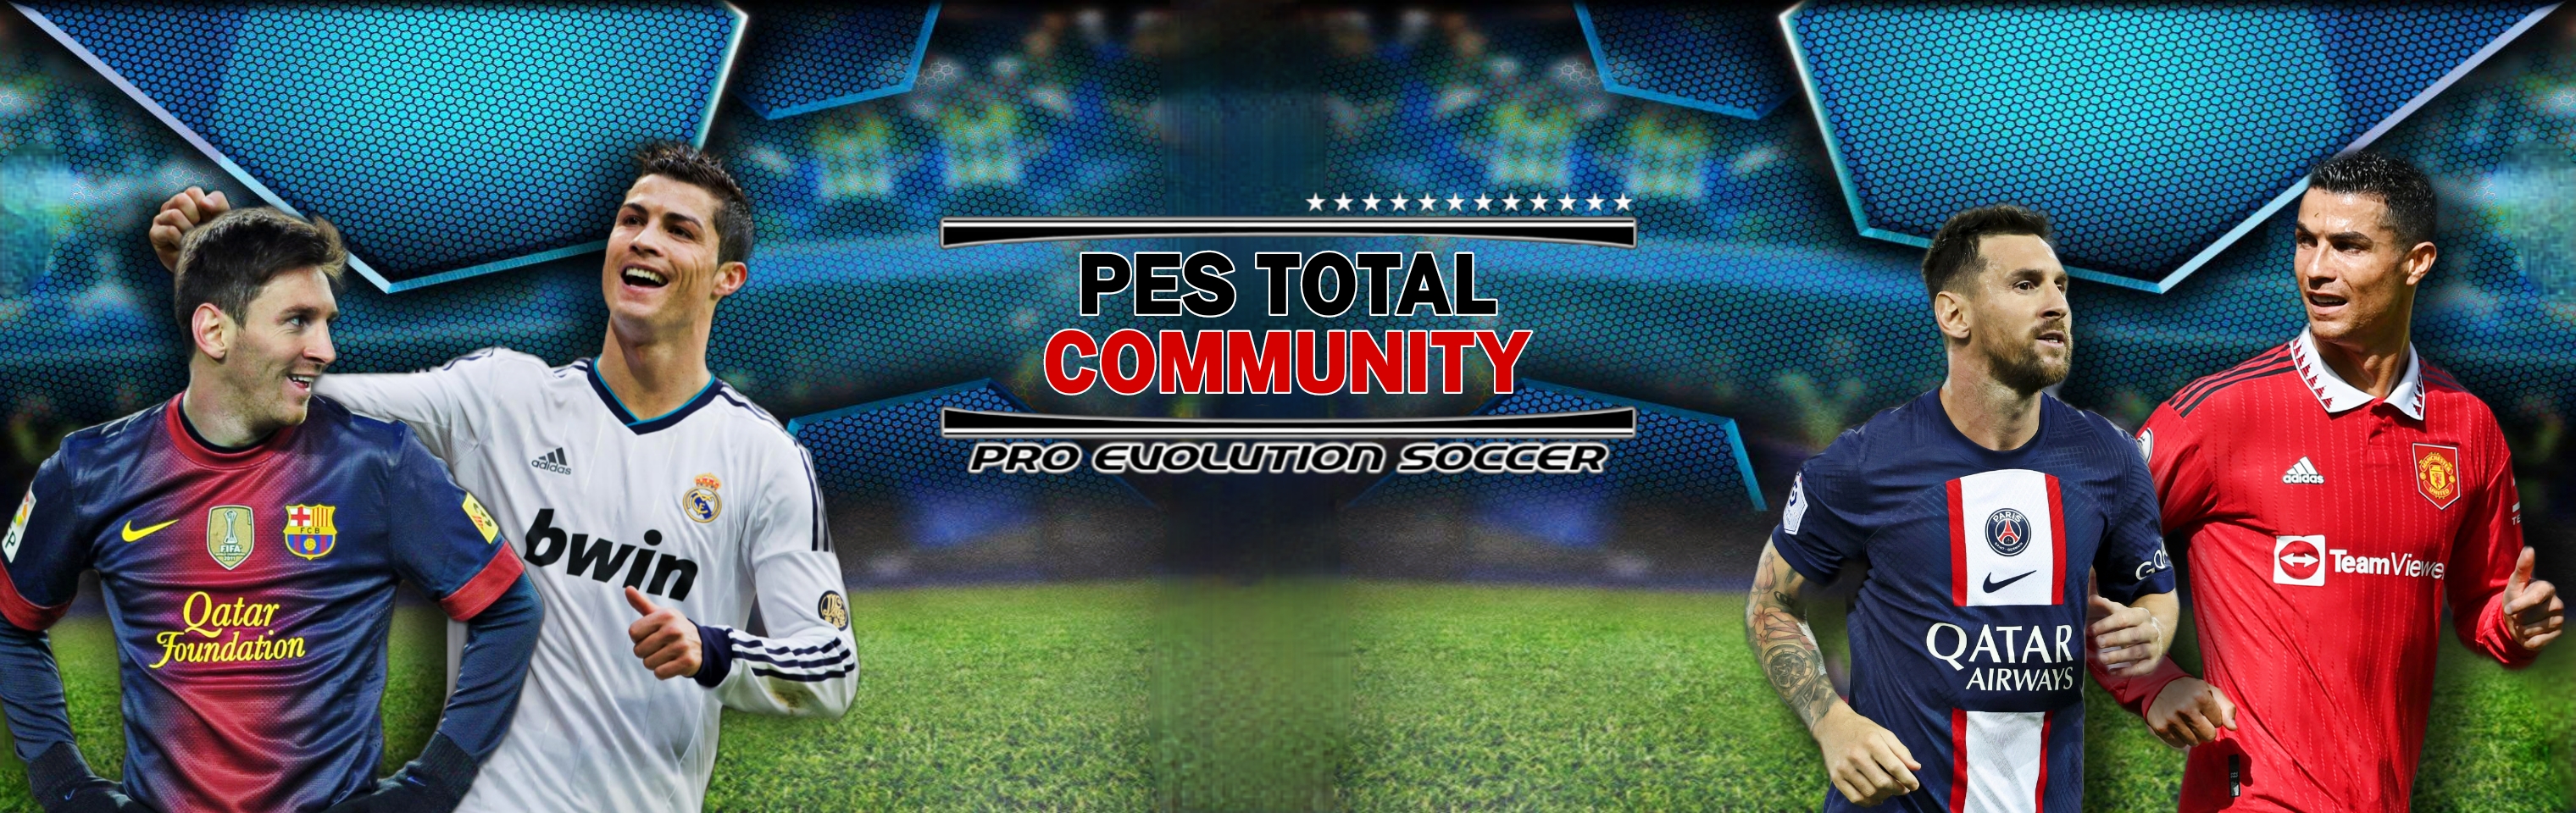 Pes Total Community